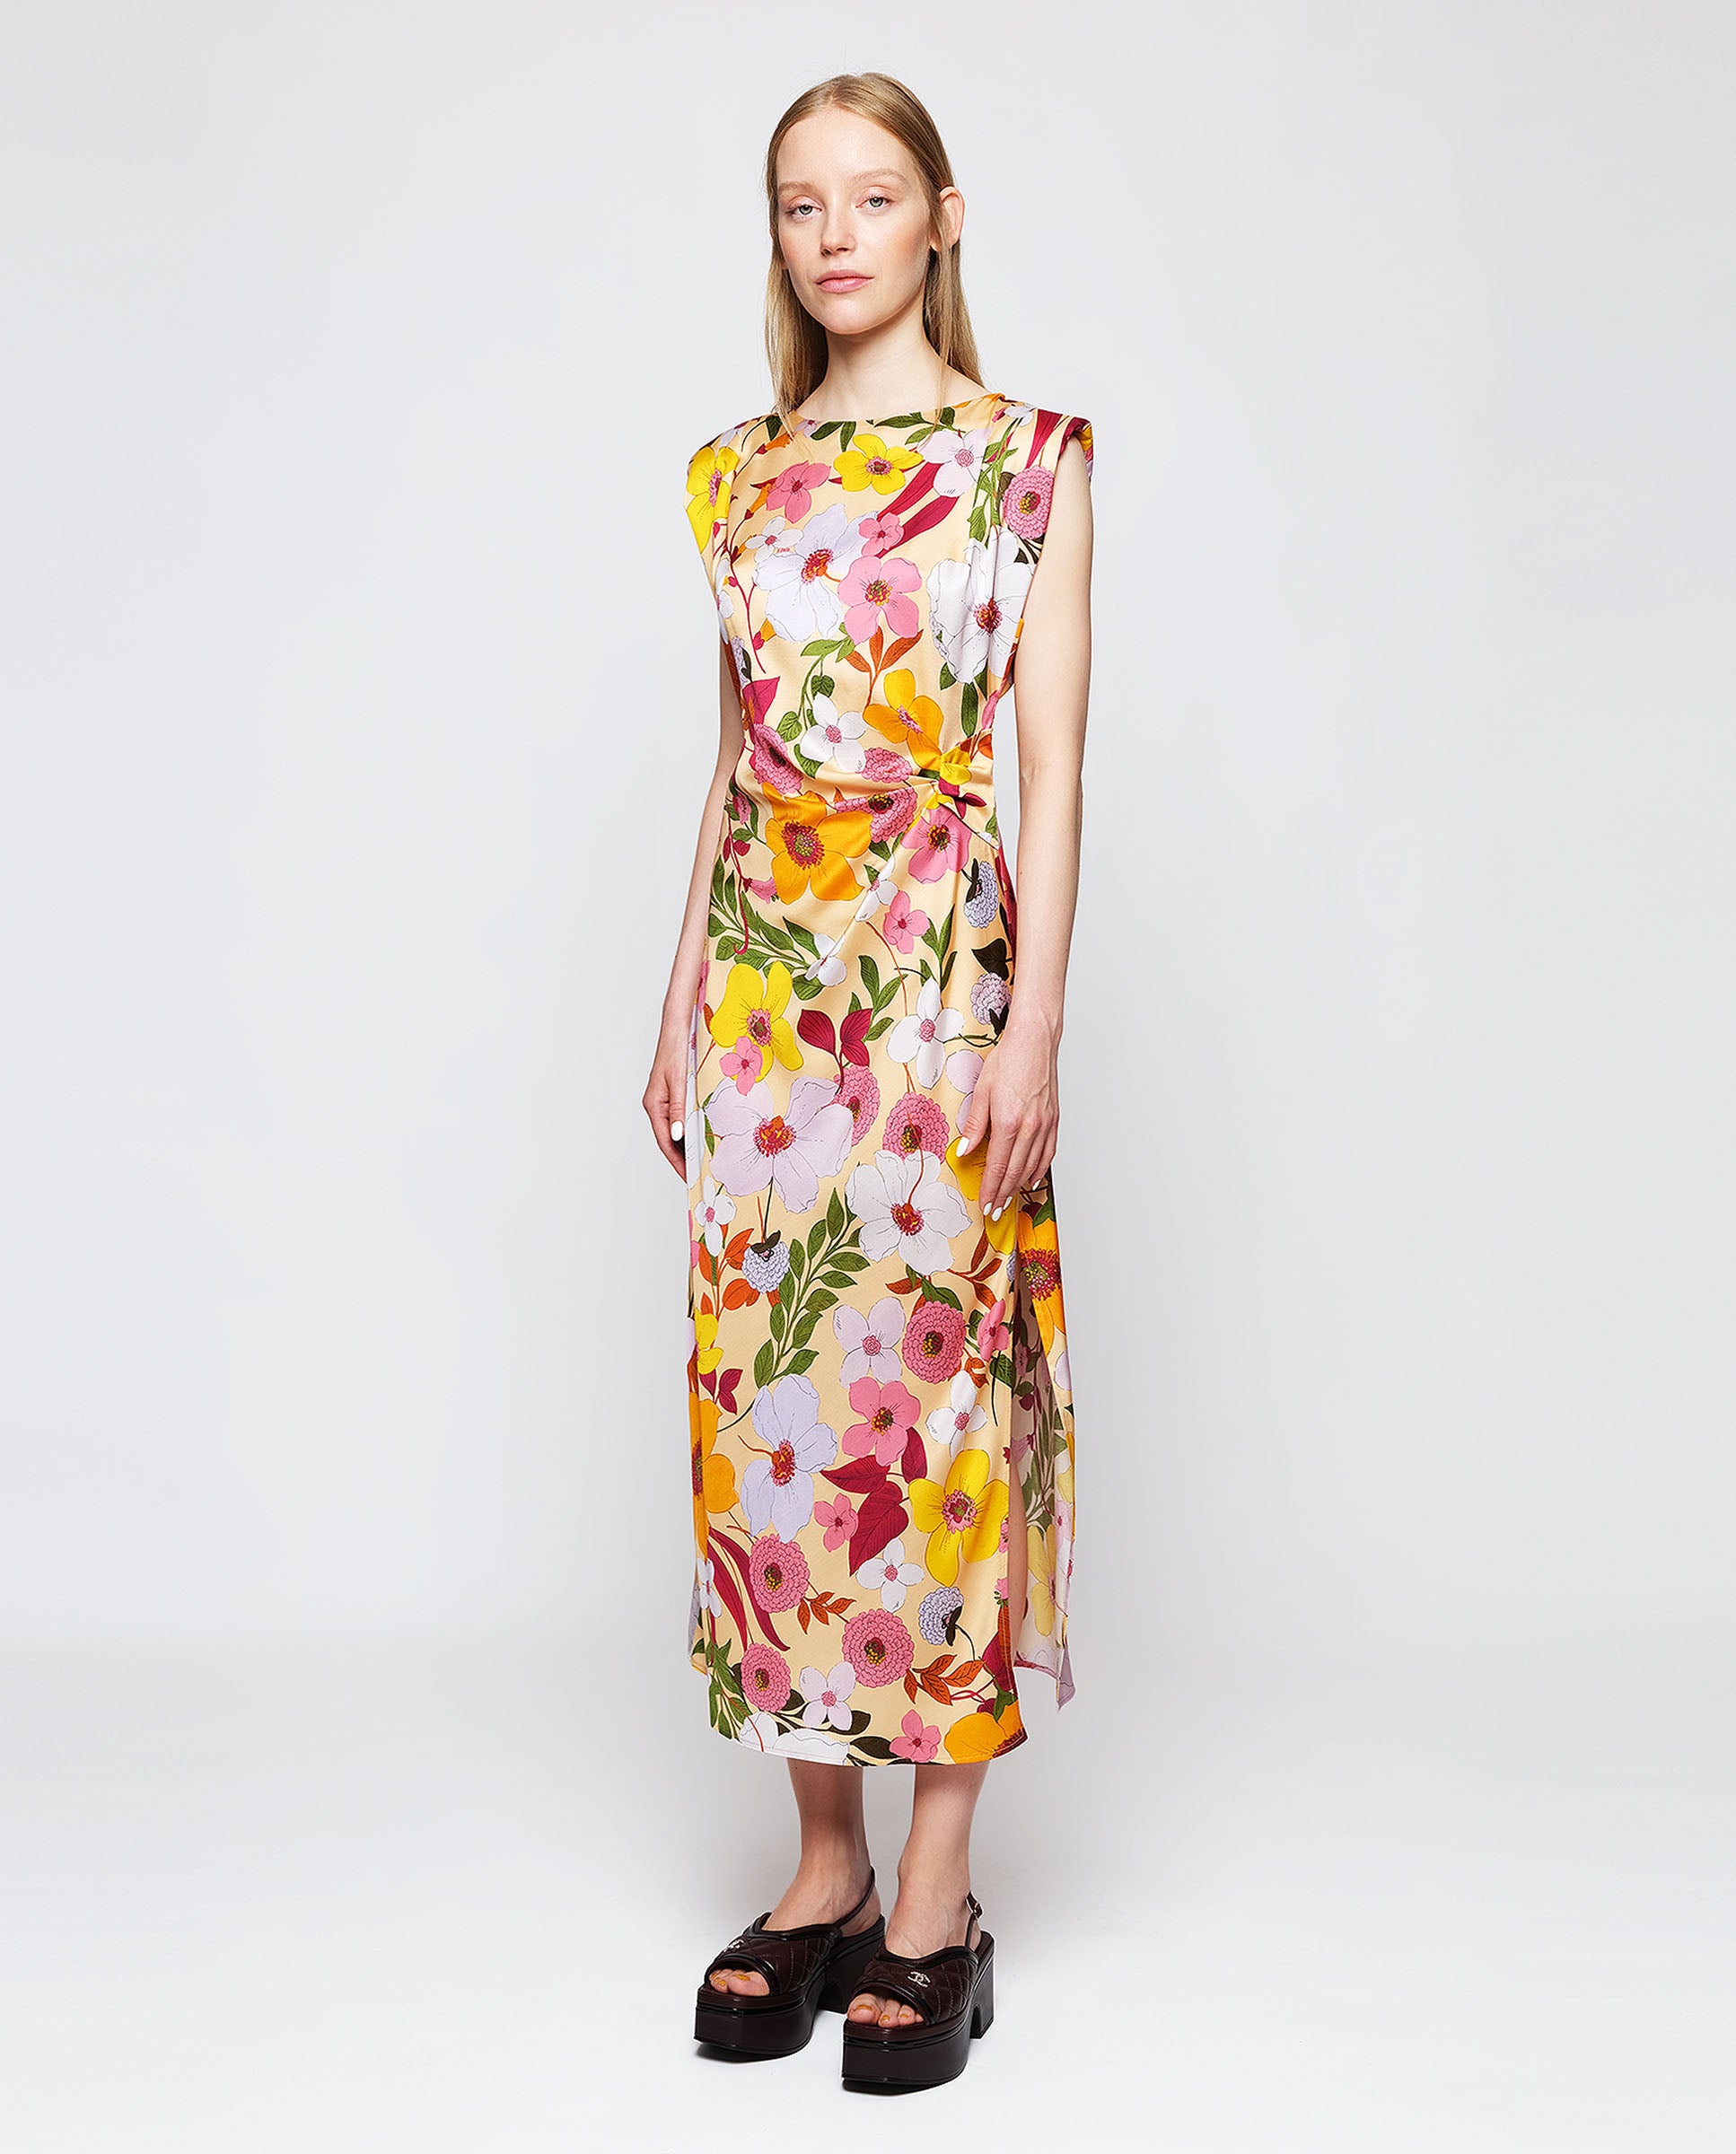 Multicolor floral print fluid dress by MIRTO